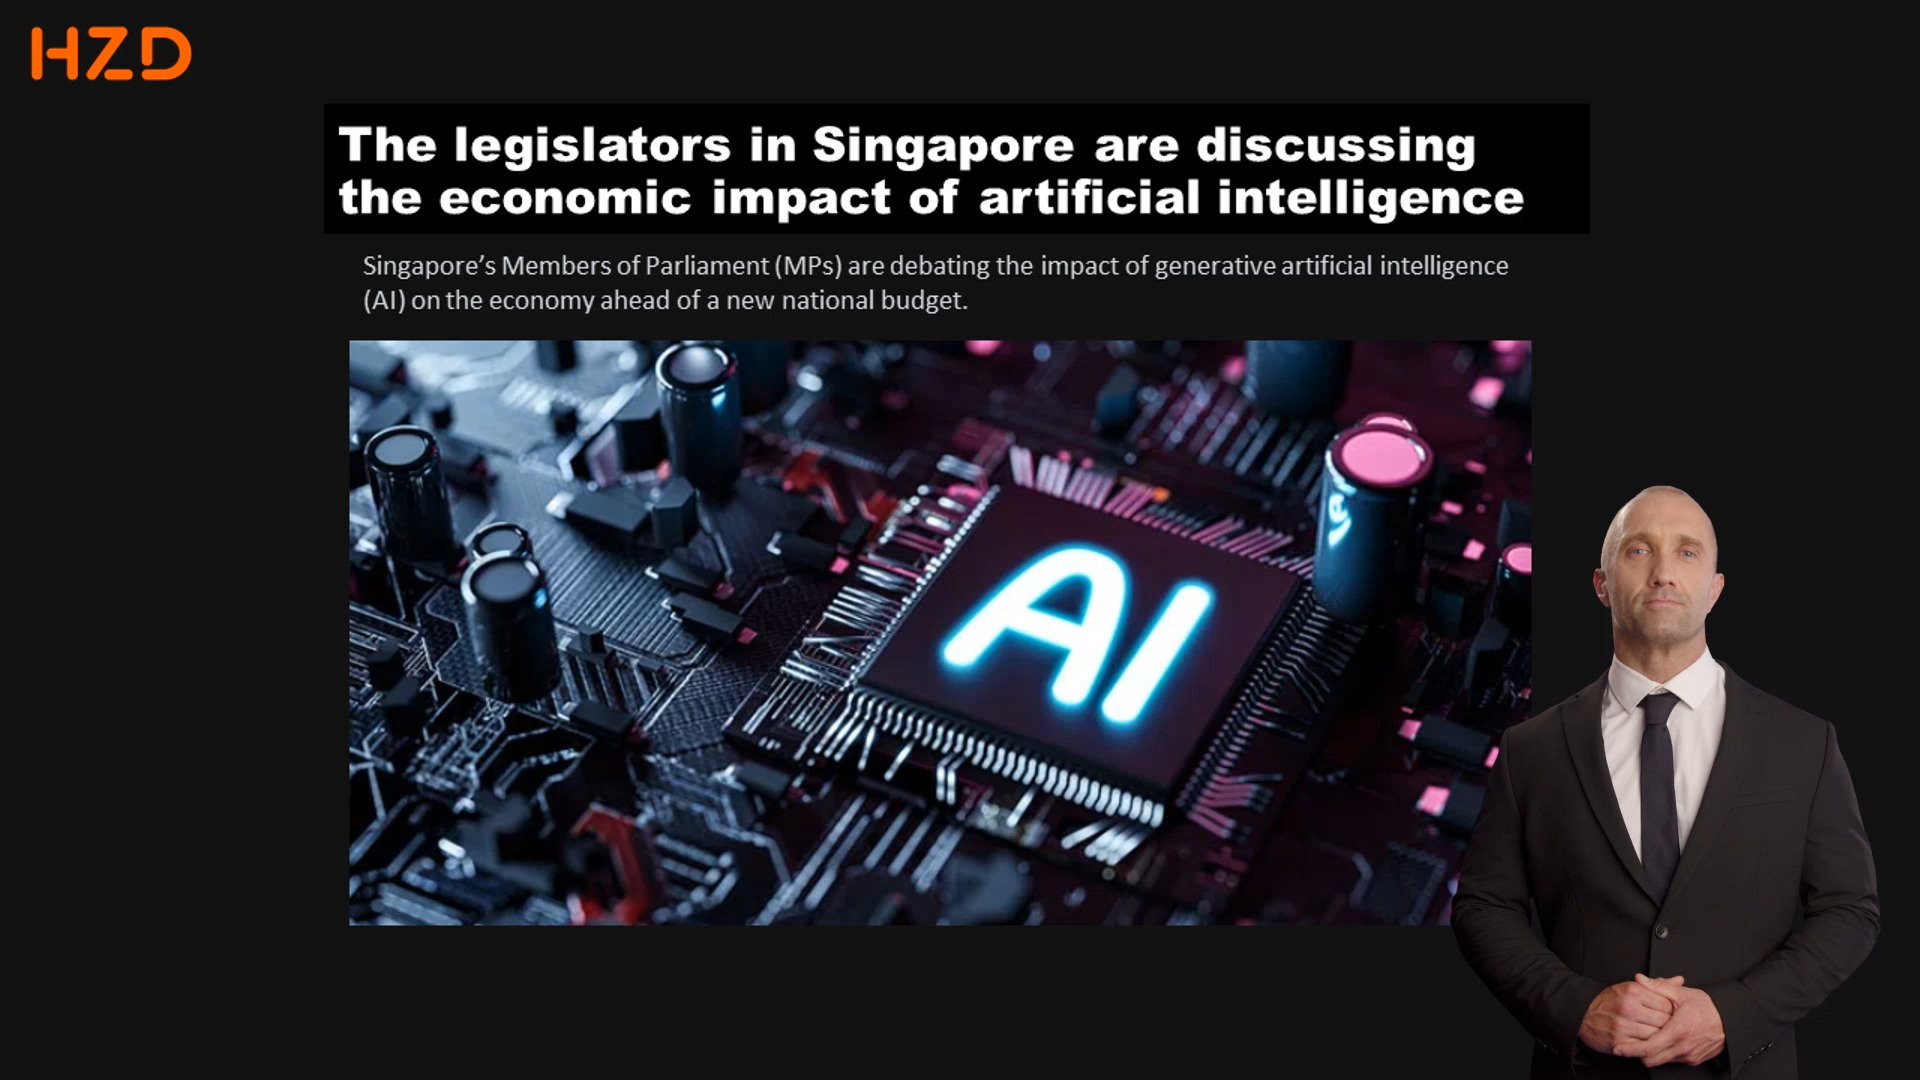 Singapore Legislators Deliberate Economic Impact of Artificial Intelligence Ahead of Budget Release